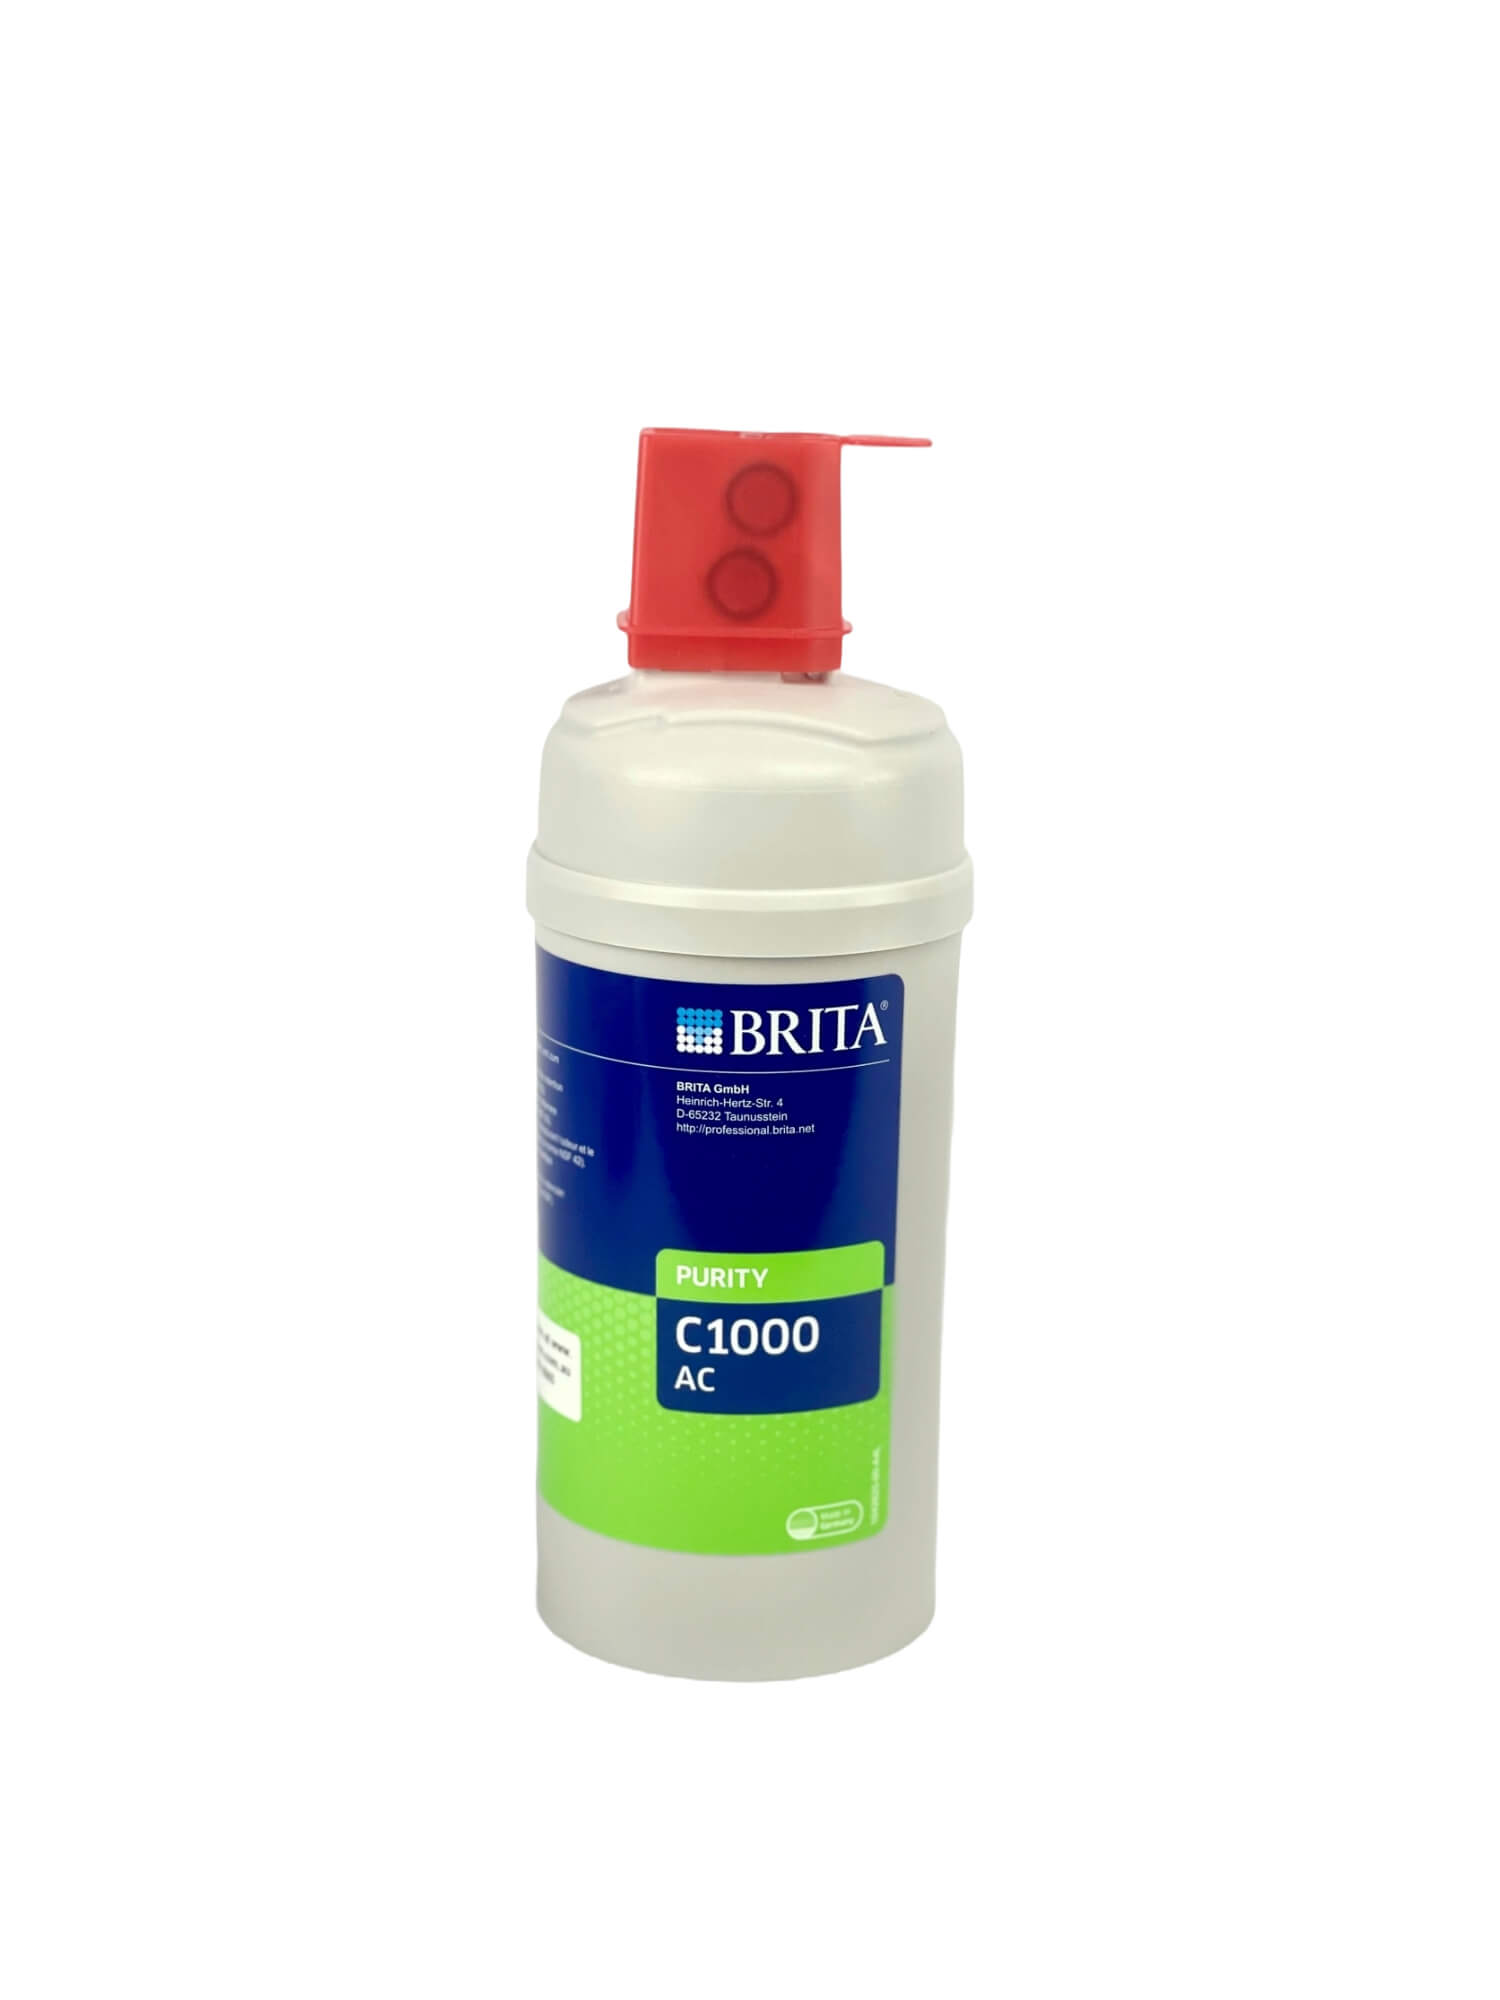 Purity C1000 AC Brita filter cartridge - catering accessories